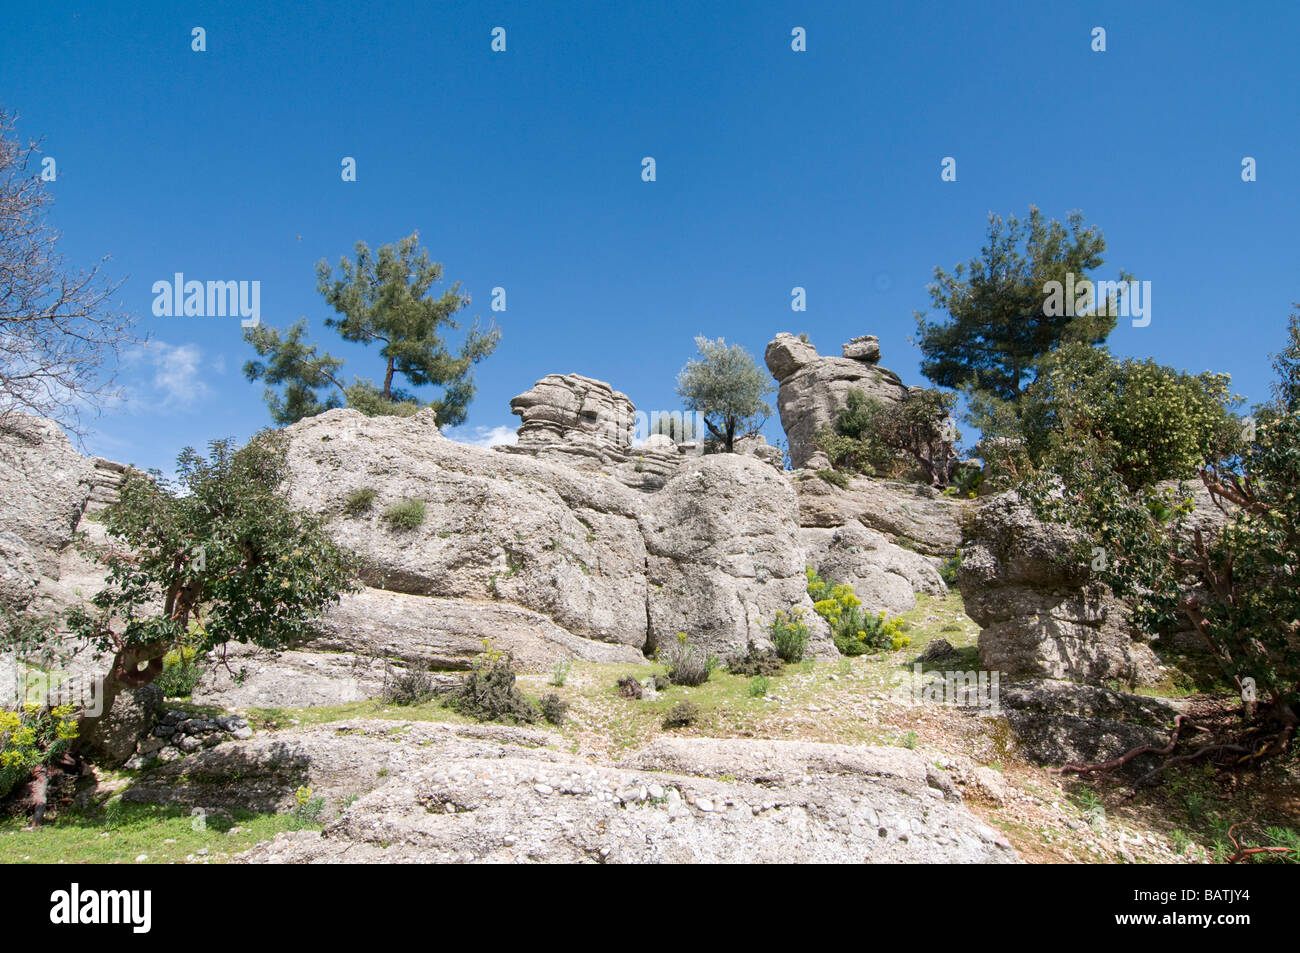 Turkey Antalya Koprulu River Canyon national park rock formations Stock Photo